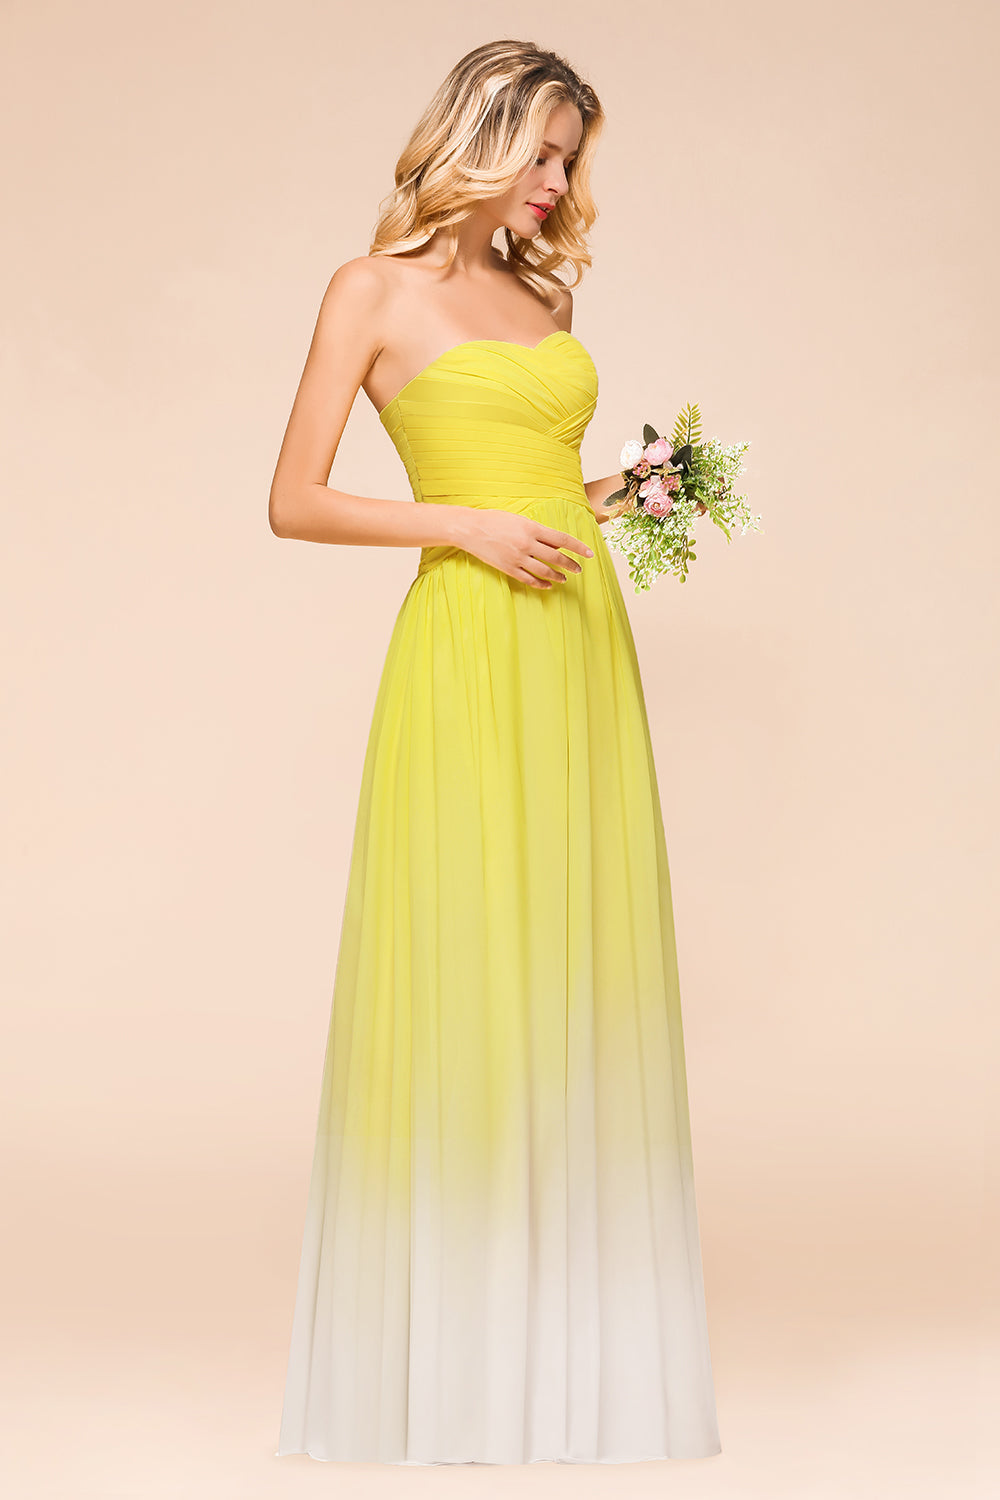 Fashionable Sweetheart Ruffle Yellow Ombre Bridesmaid Dress